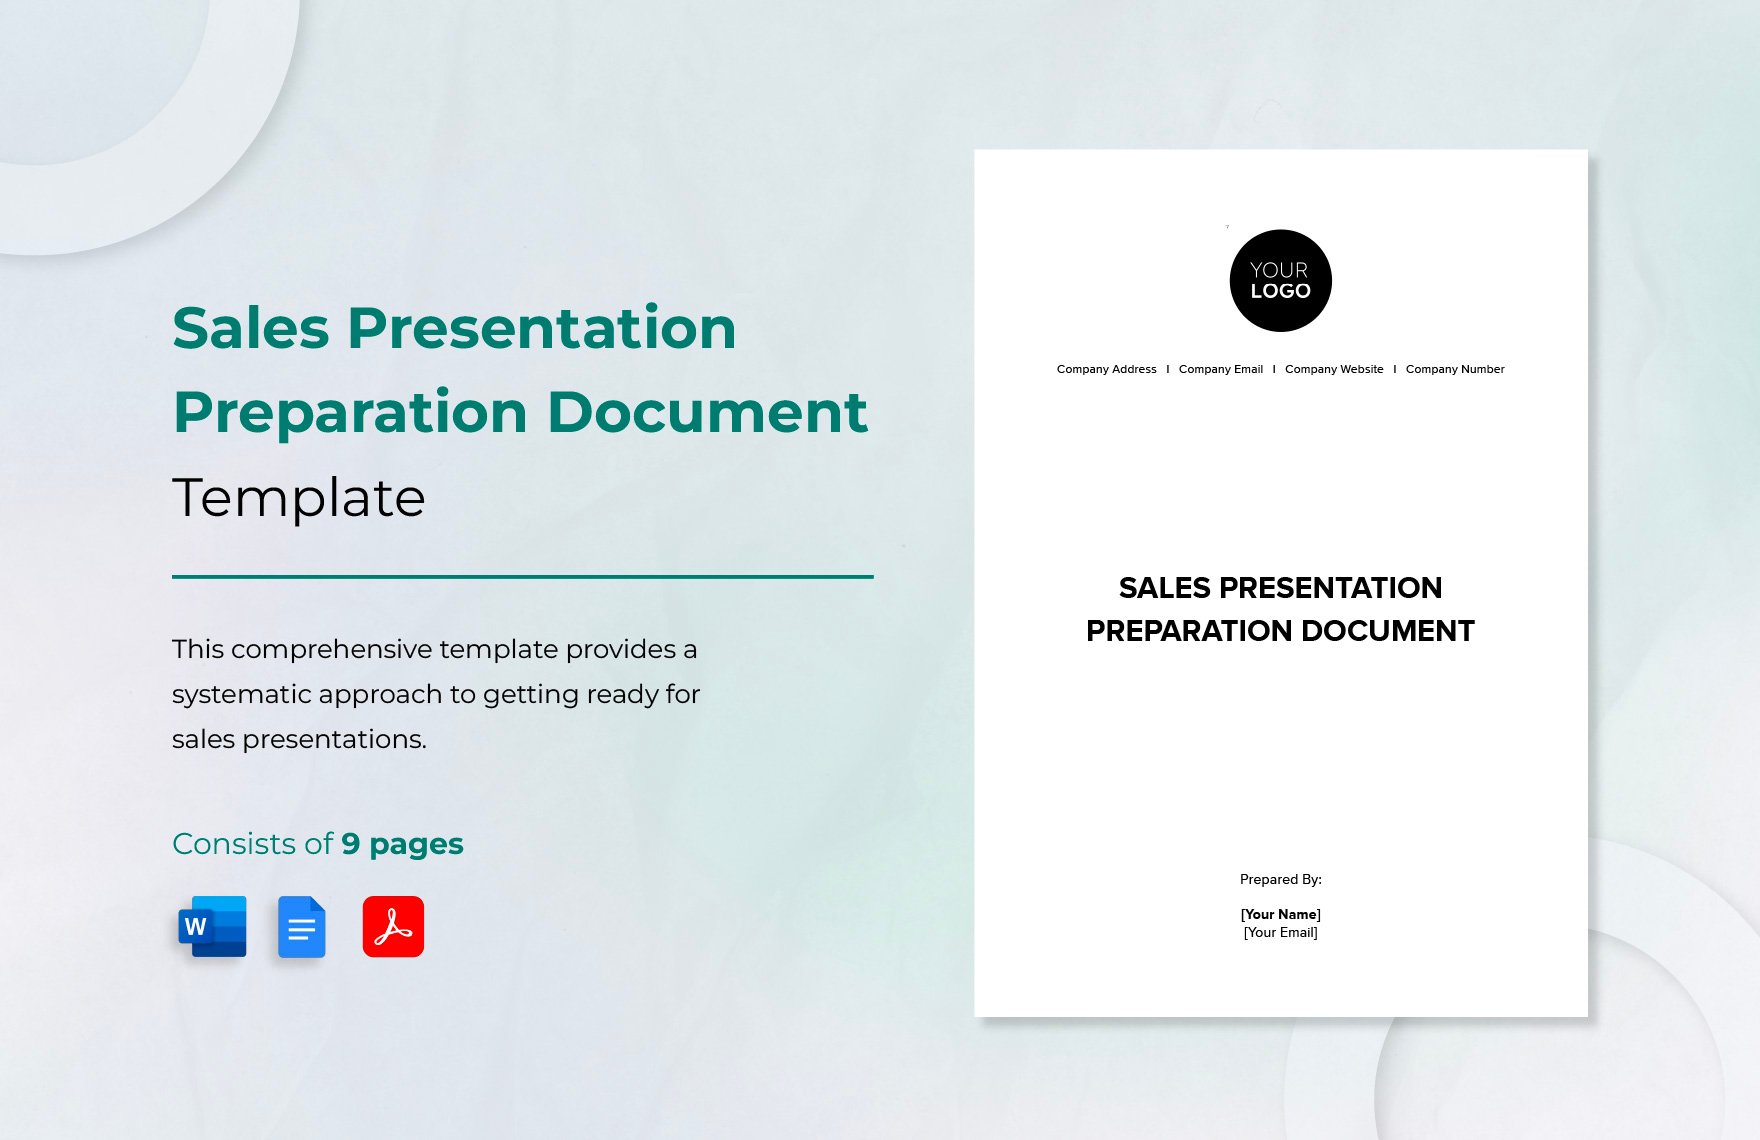 Sales Presentation Preparation Document Template